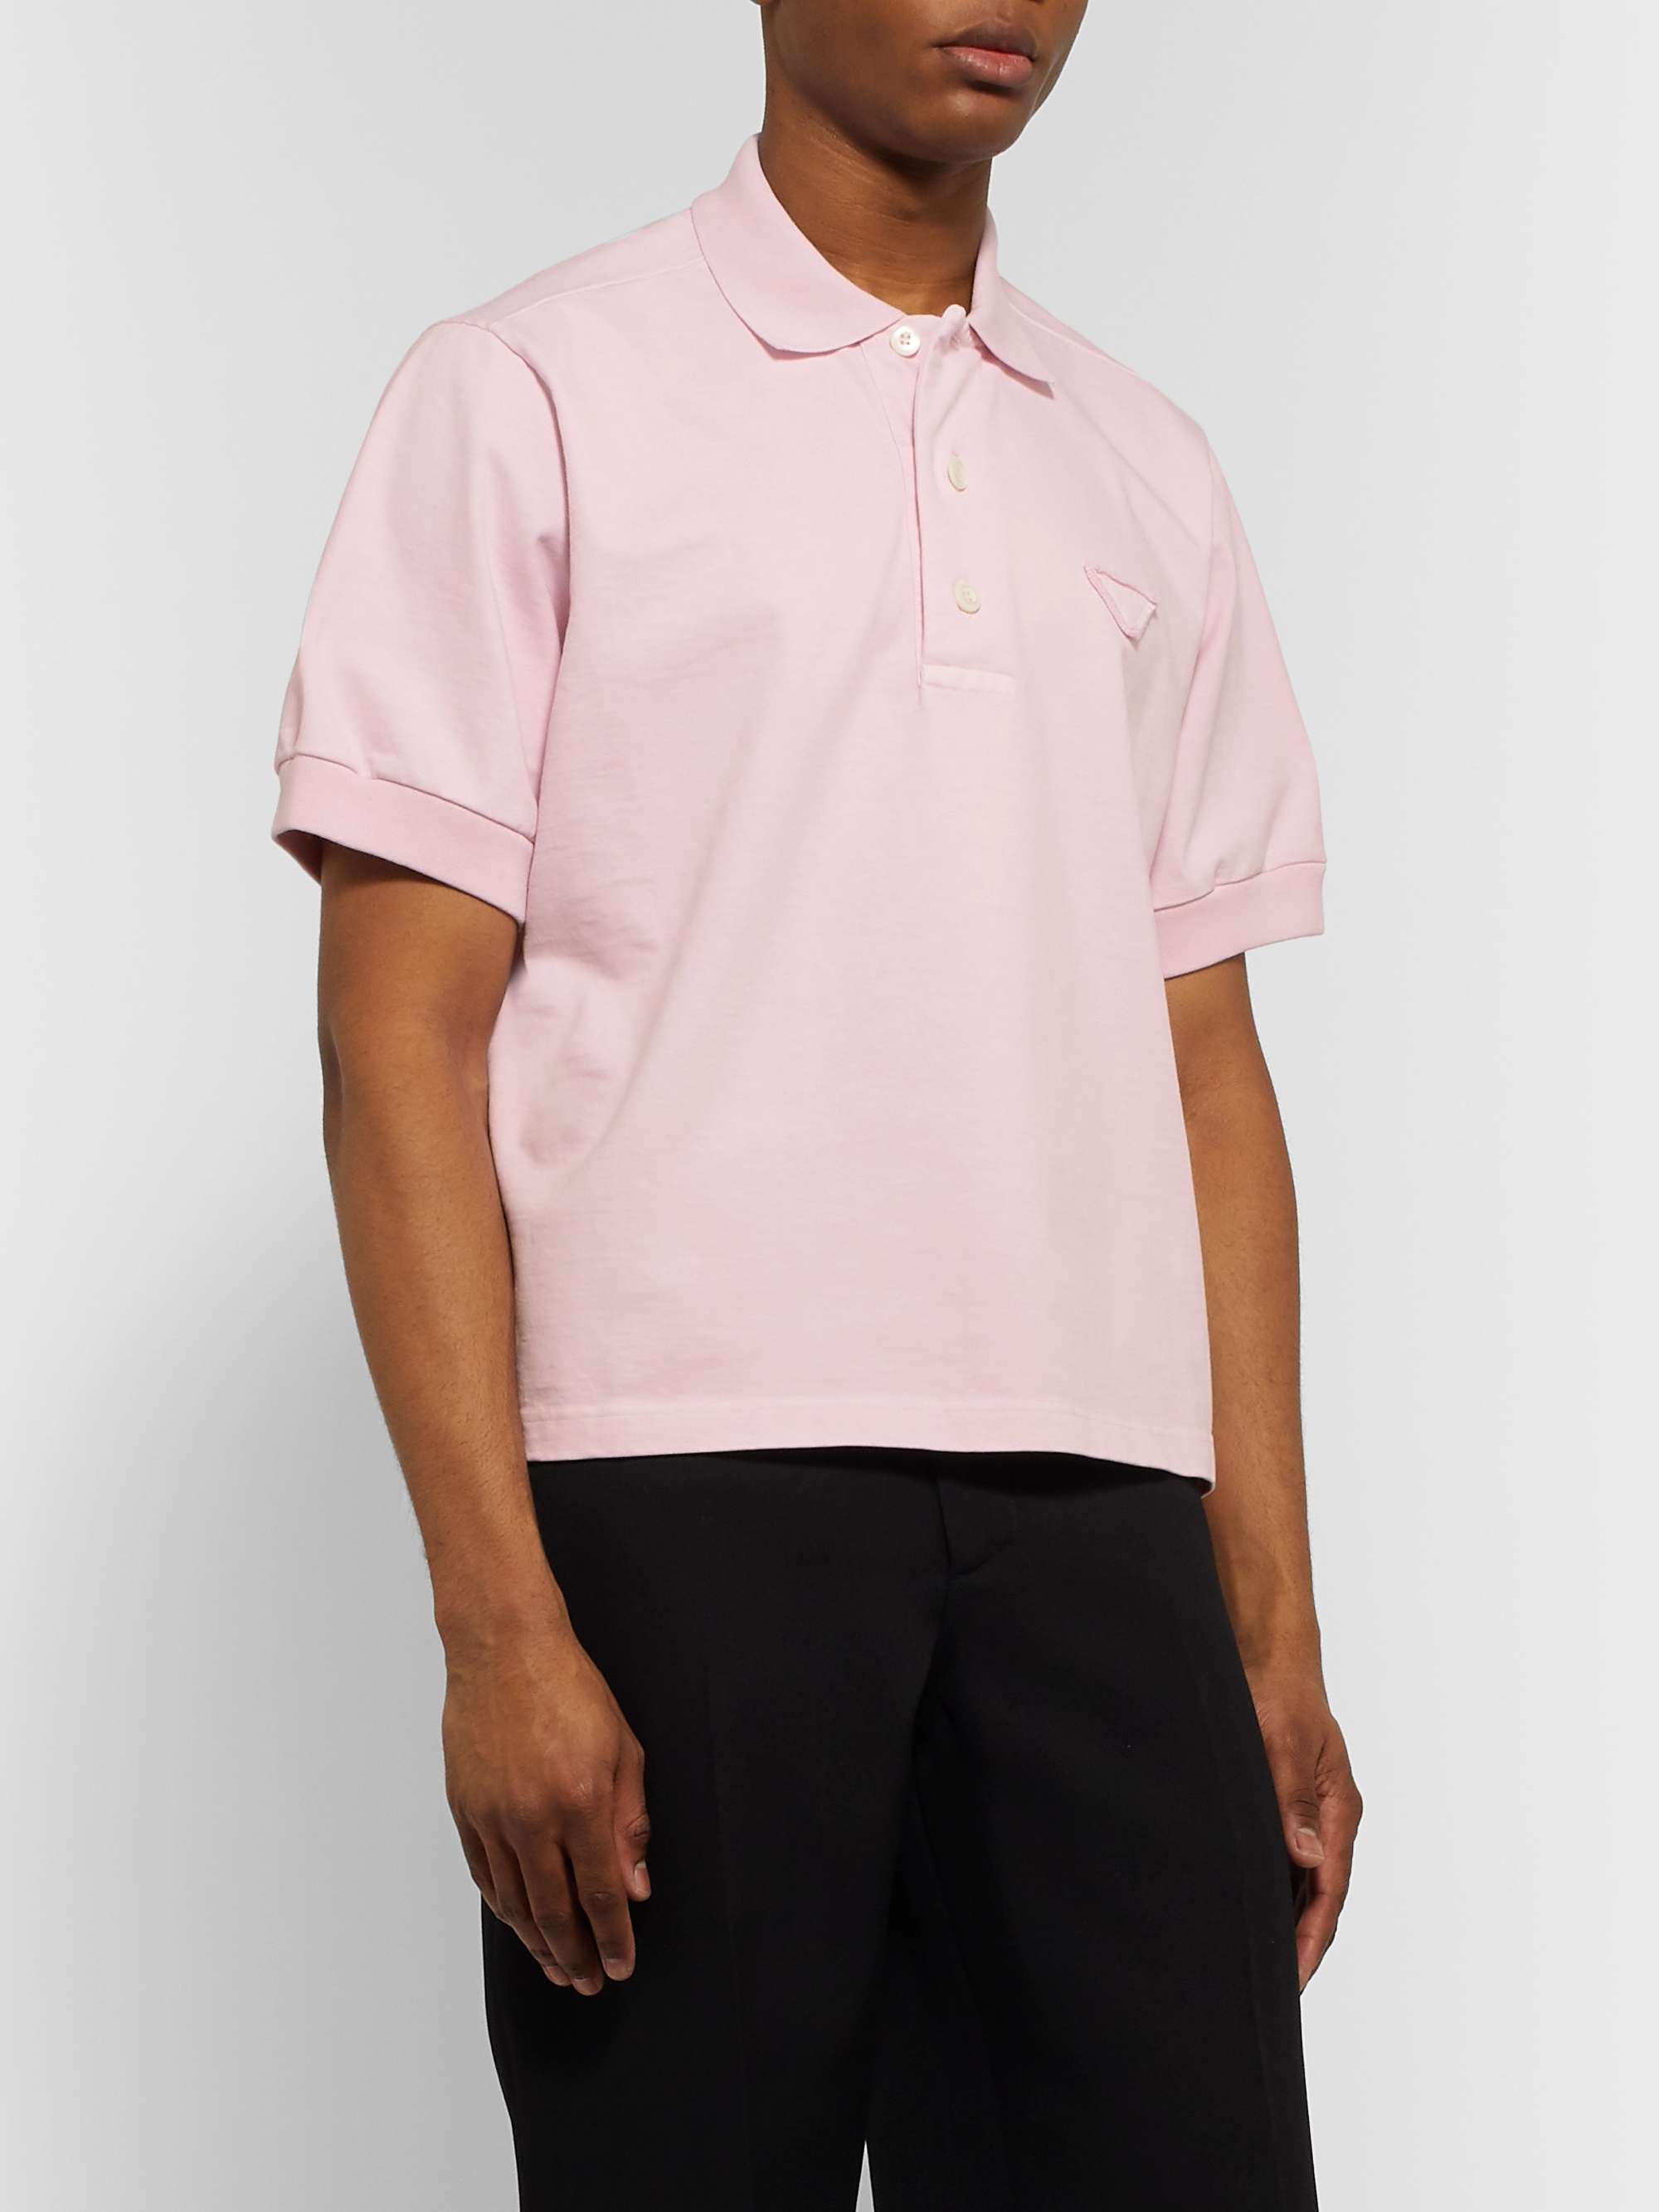 PRADA * Logo-Appliquéd Cotton-Jersey Polo Shirt for Men | MR PORTER